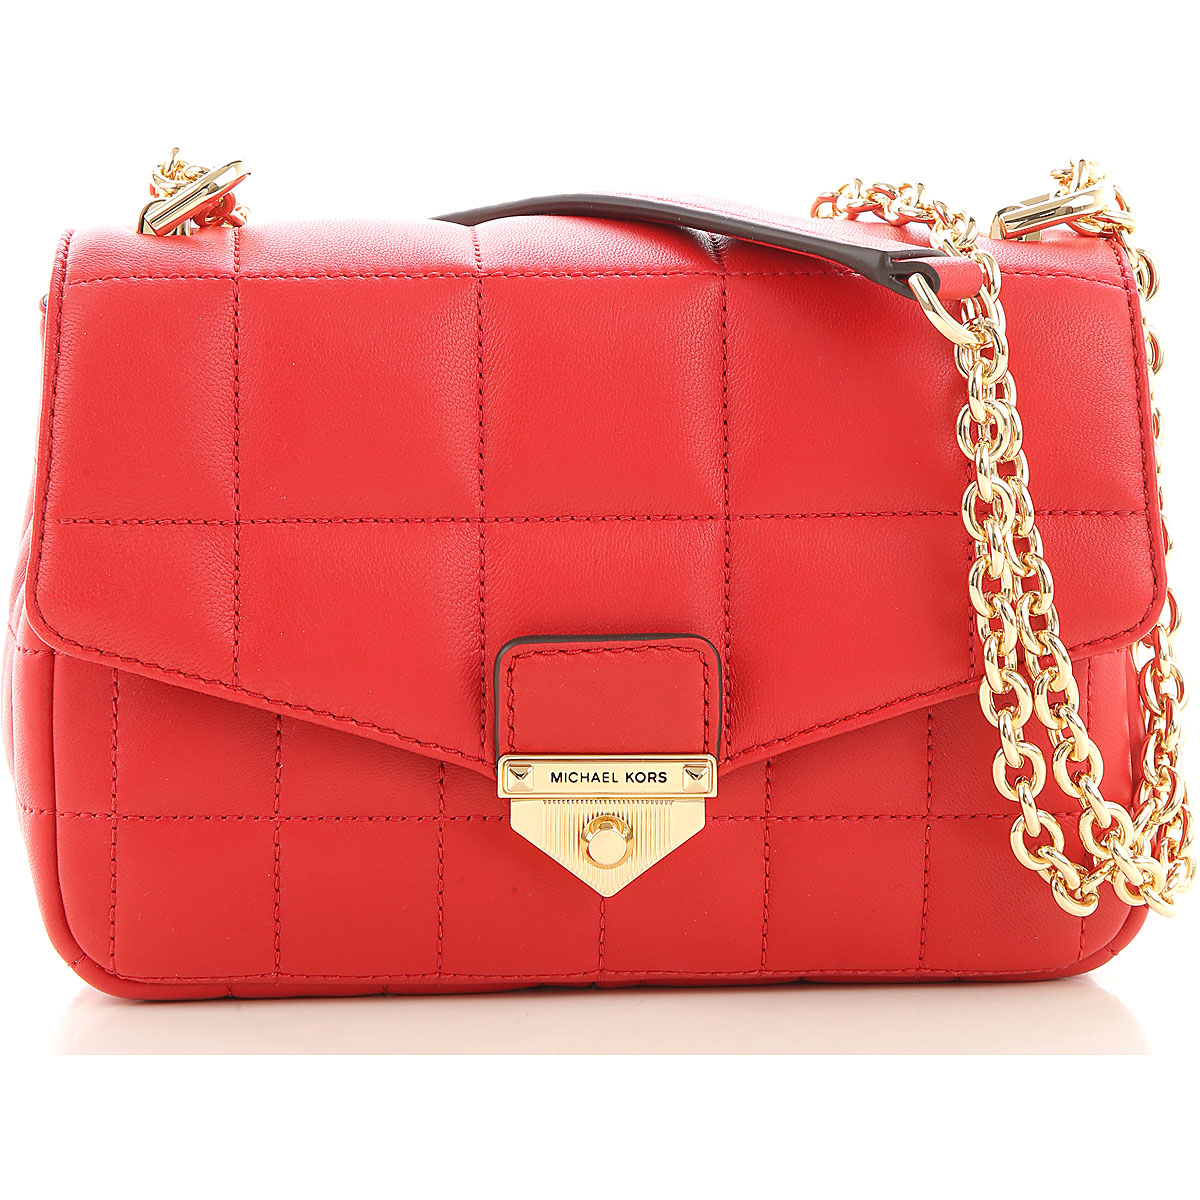 Handbags Michael Kors, Style code: 30h0g1sl1t-683-